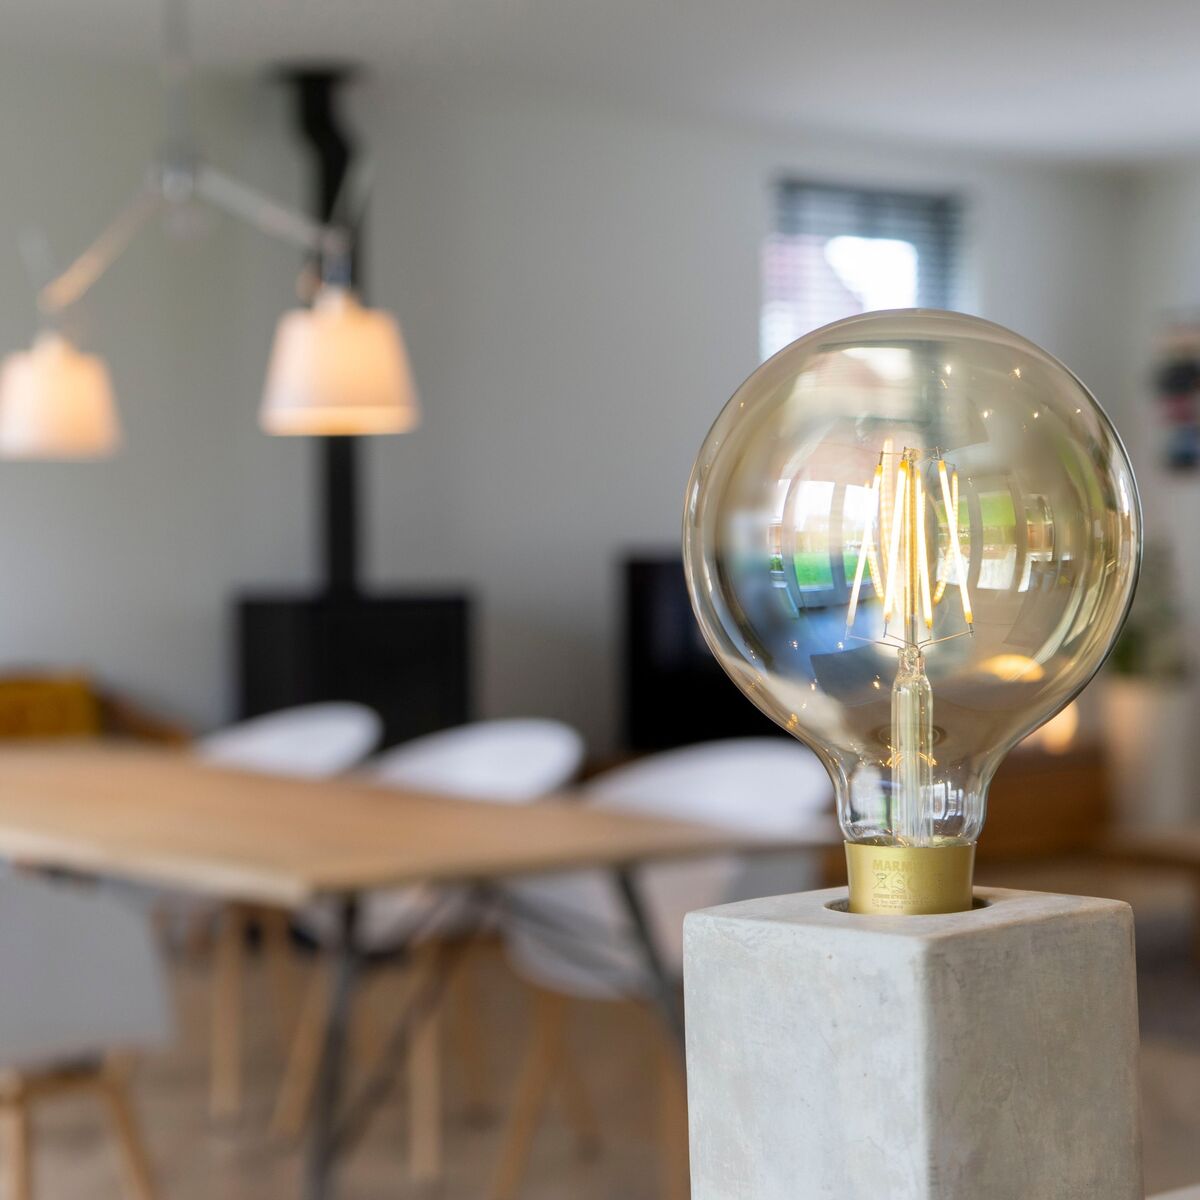 Glow LI - Filament bulb - Ambiance Image of Glow LI in a living room | Marmitek